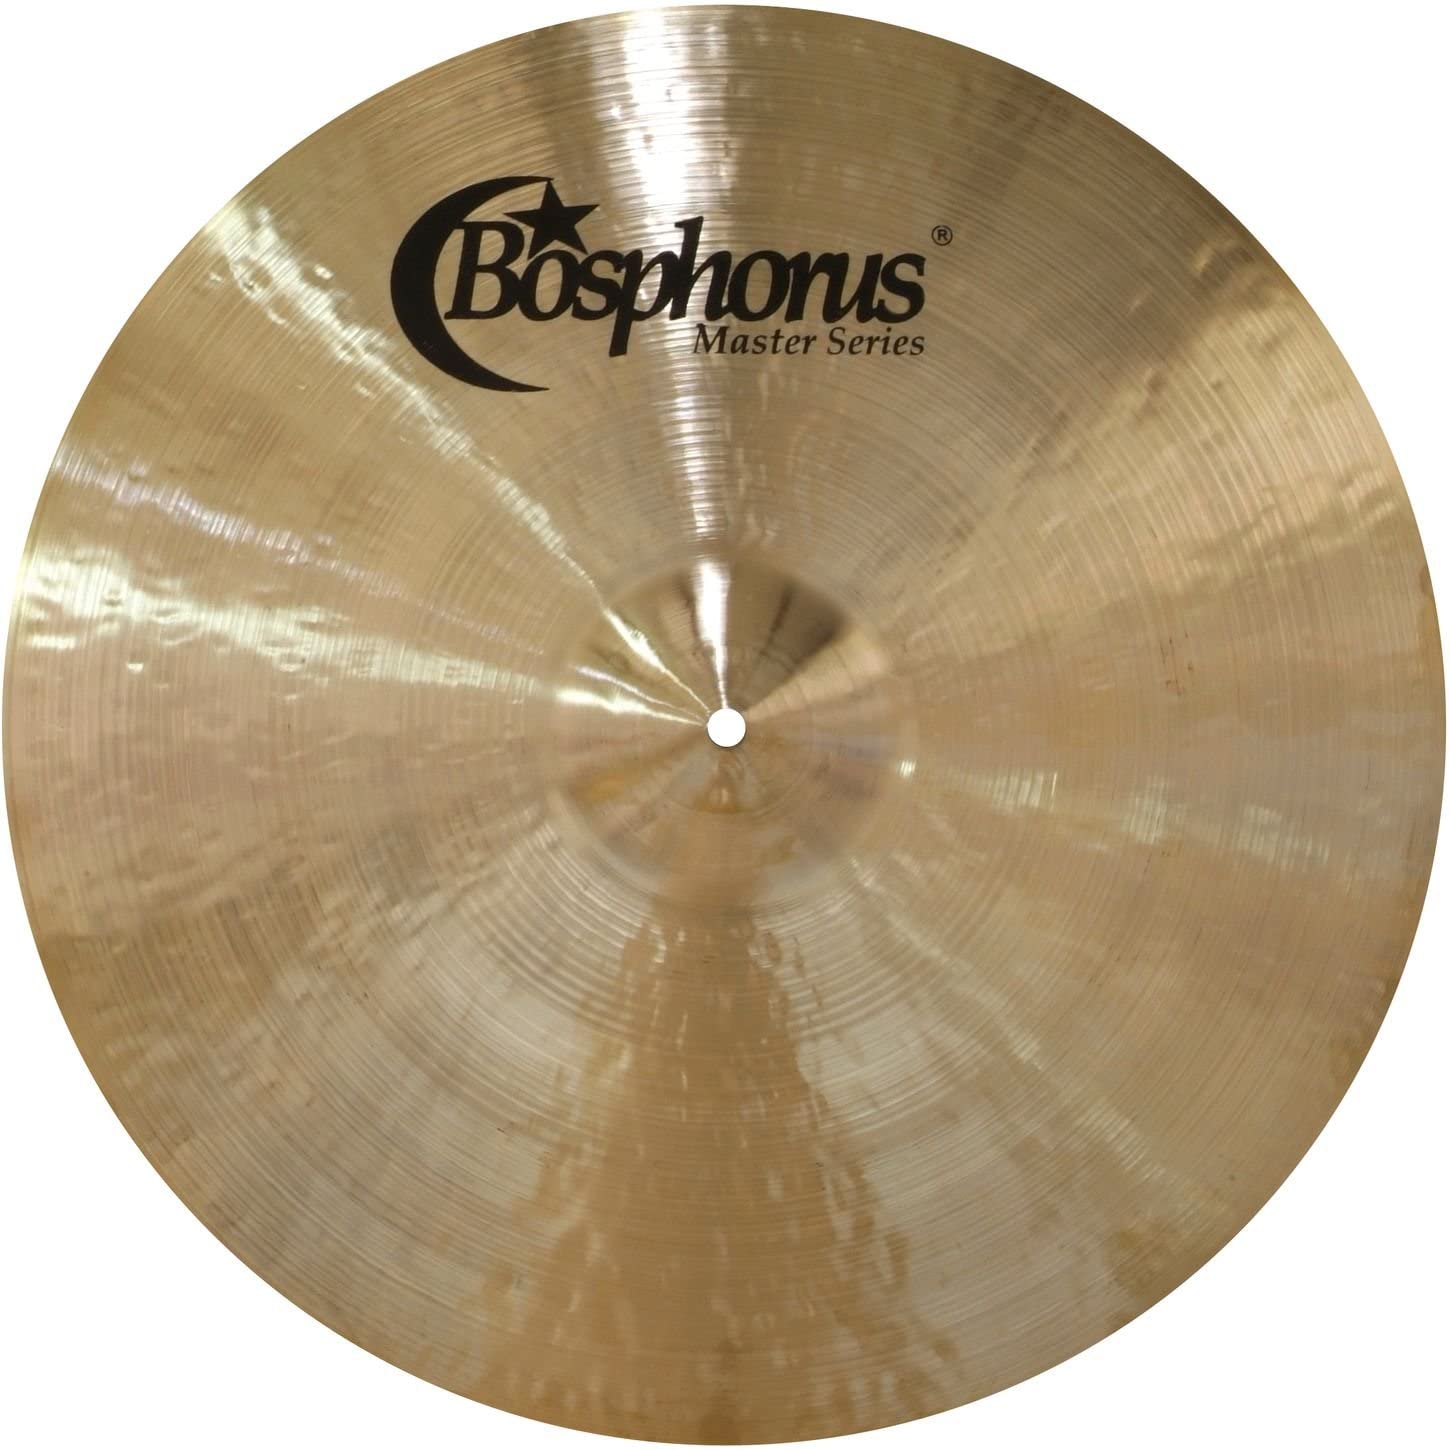 Bosphorus Cymbals M24R 24-Inch Master